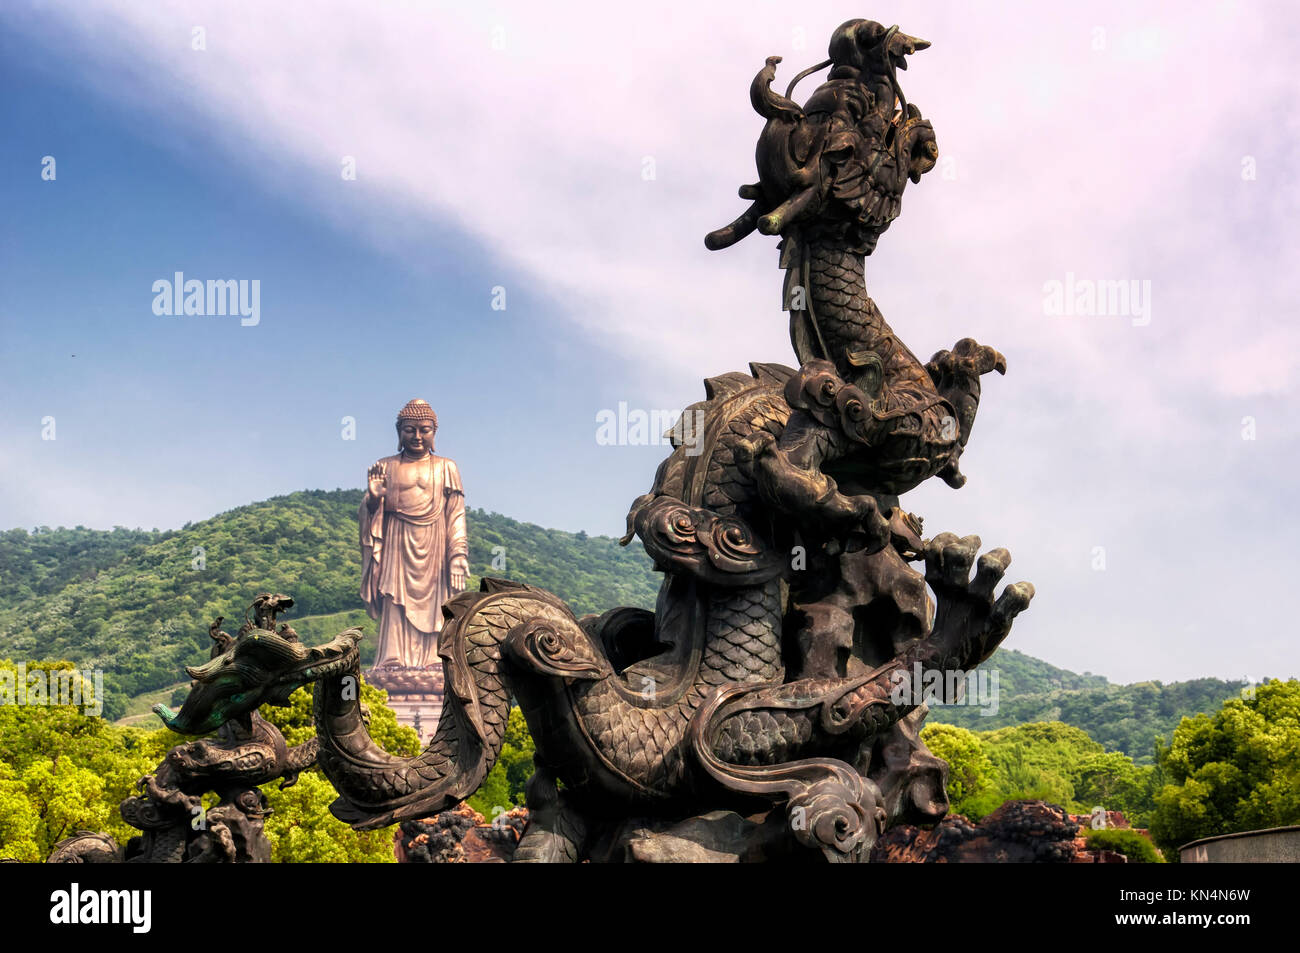 Einer der neun Drachen der Nine Dragons Baden Shakyamuni Buddha Brunnen am Lingshan Grand Scenic Area in Wuxi, China, Provinz Jiangsu. Stockfoto